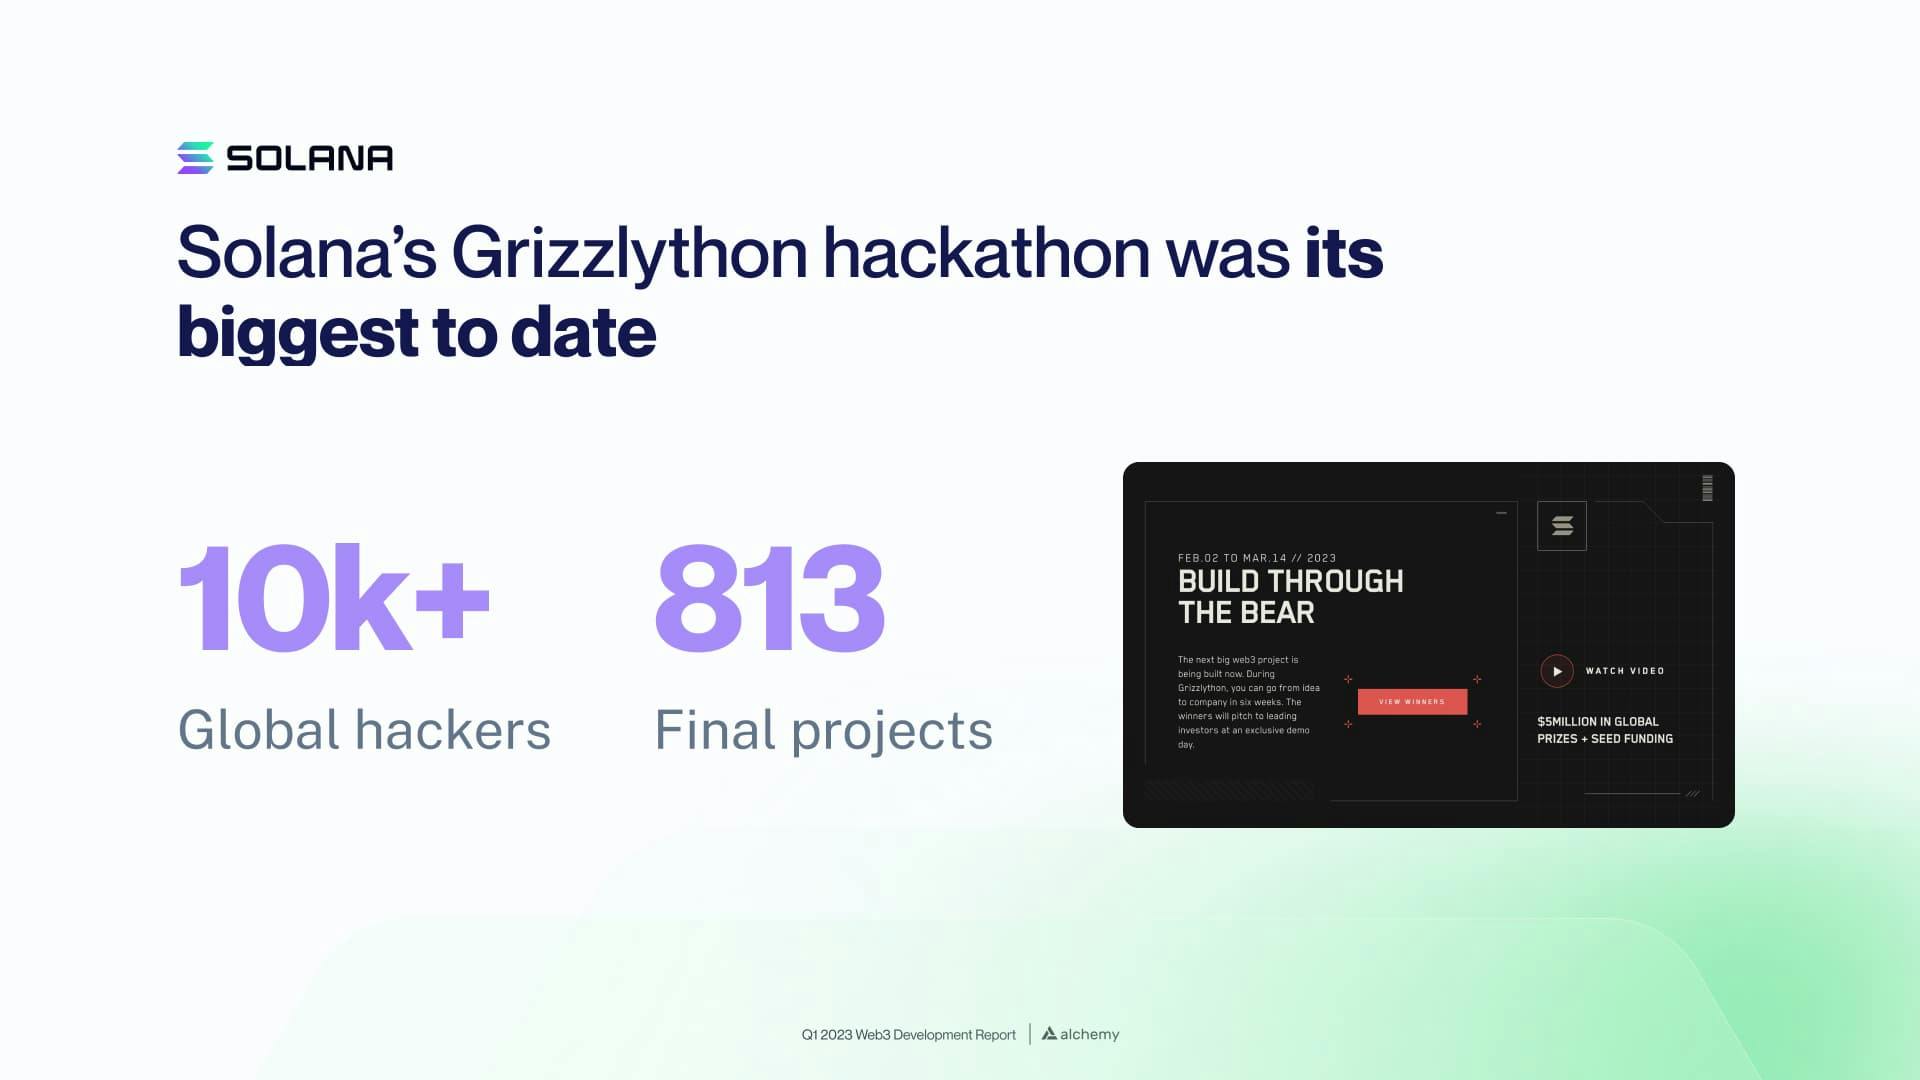 Q1 2023 Solana developer statistics for the Grizzlython hackathon